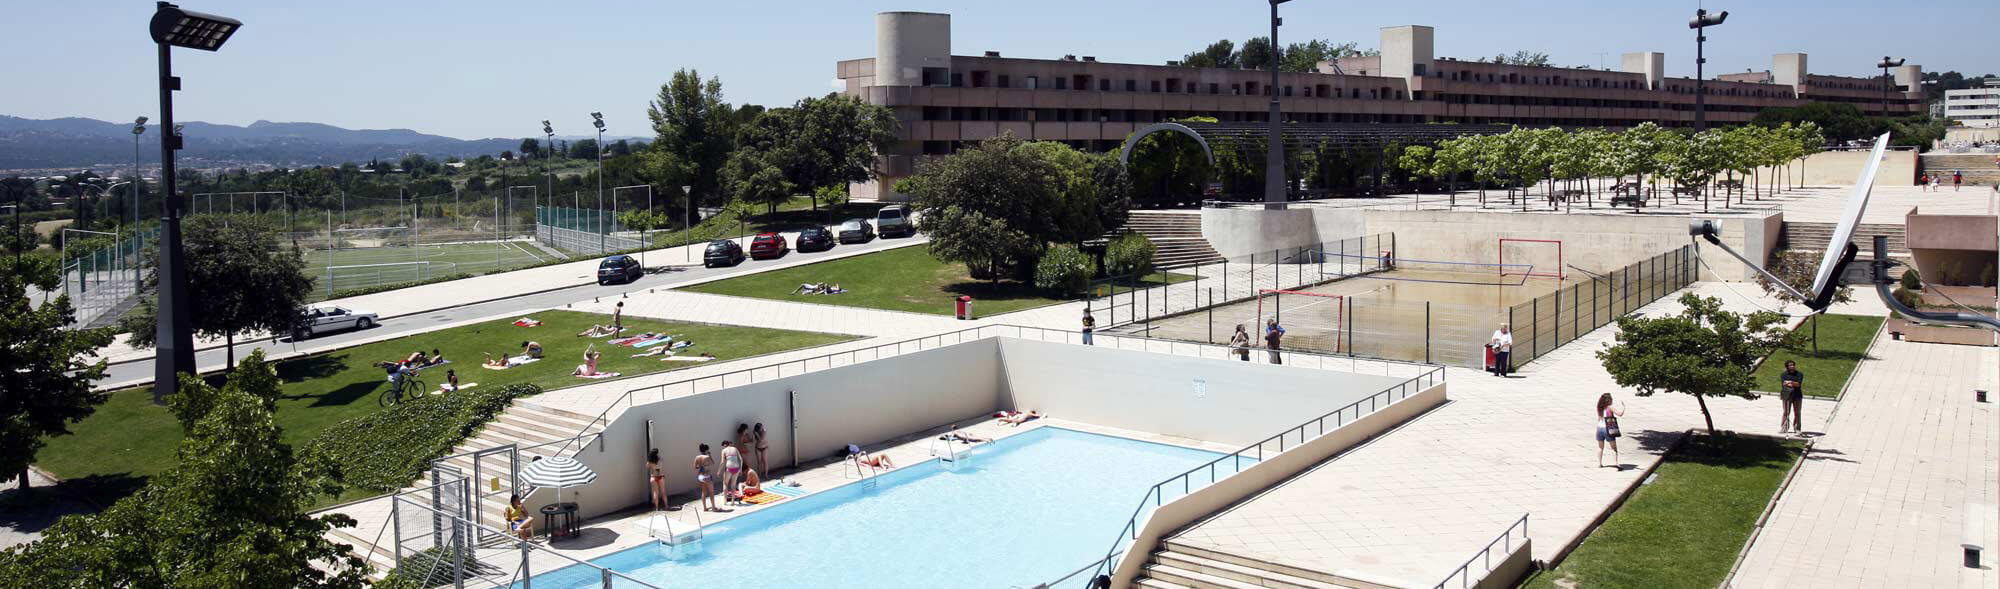 Complejo residencial Vila Universitària